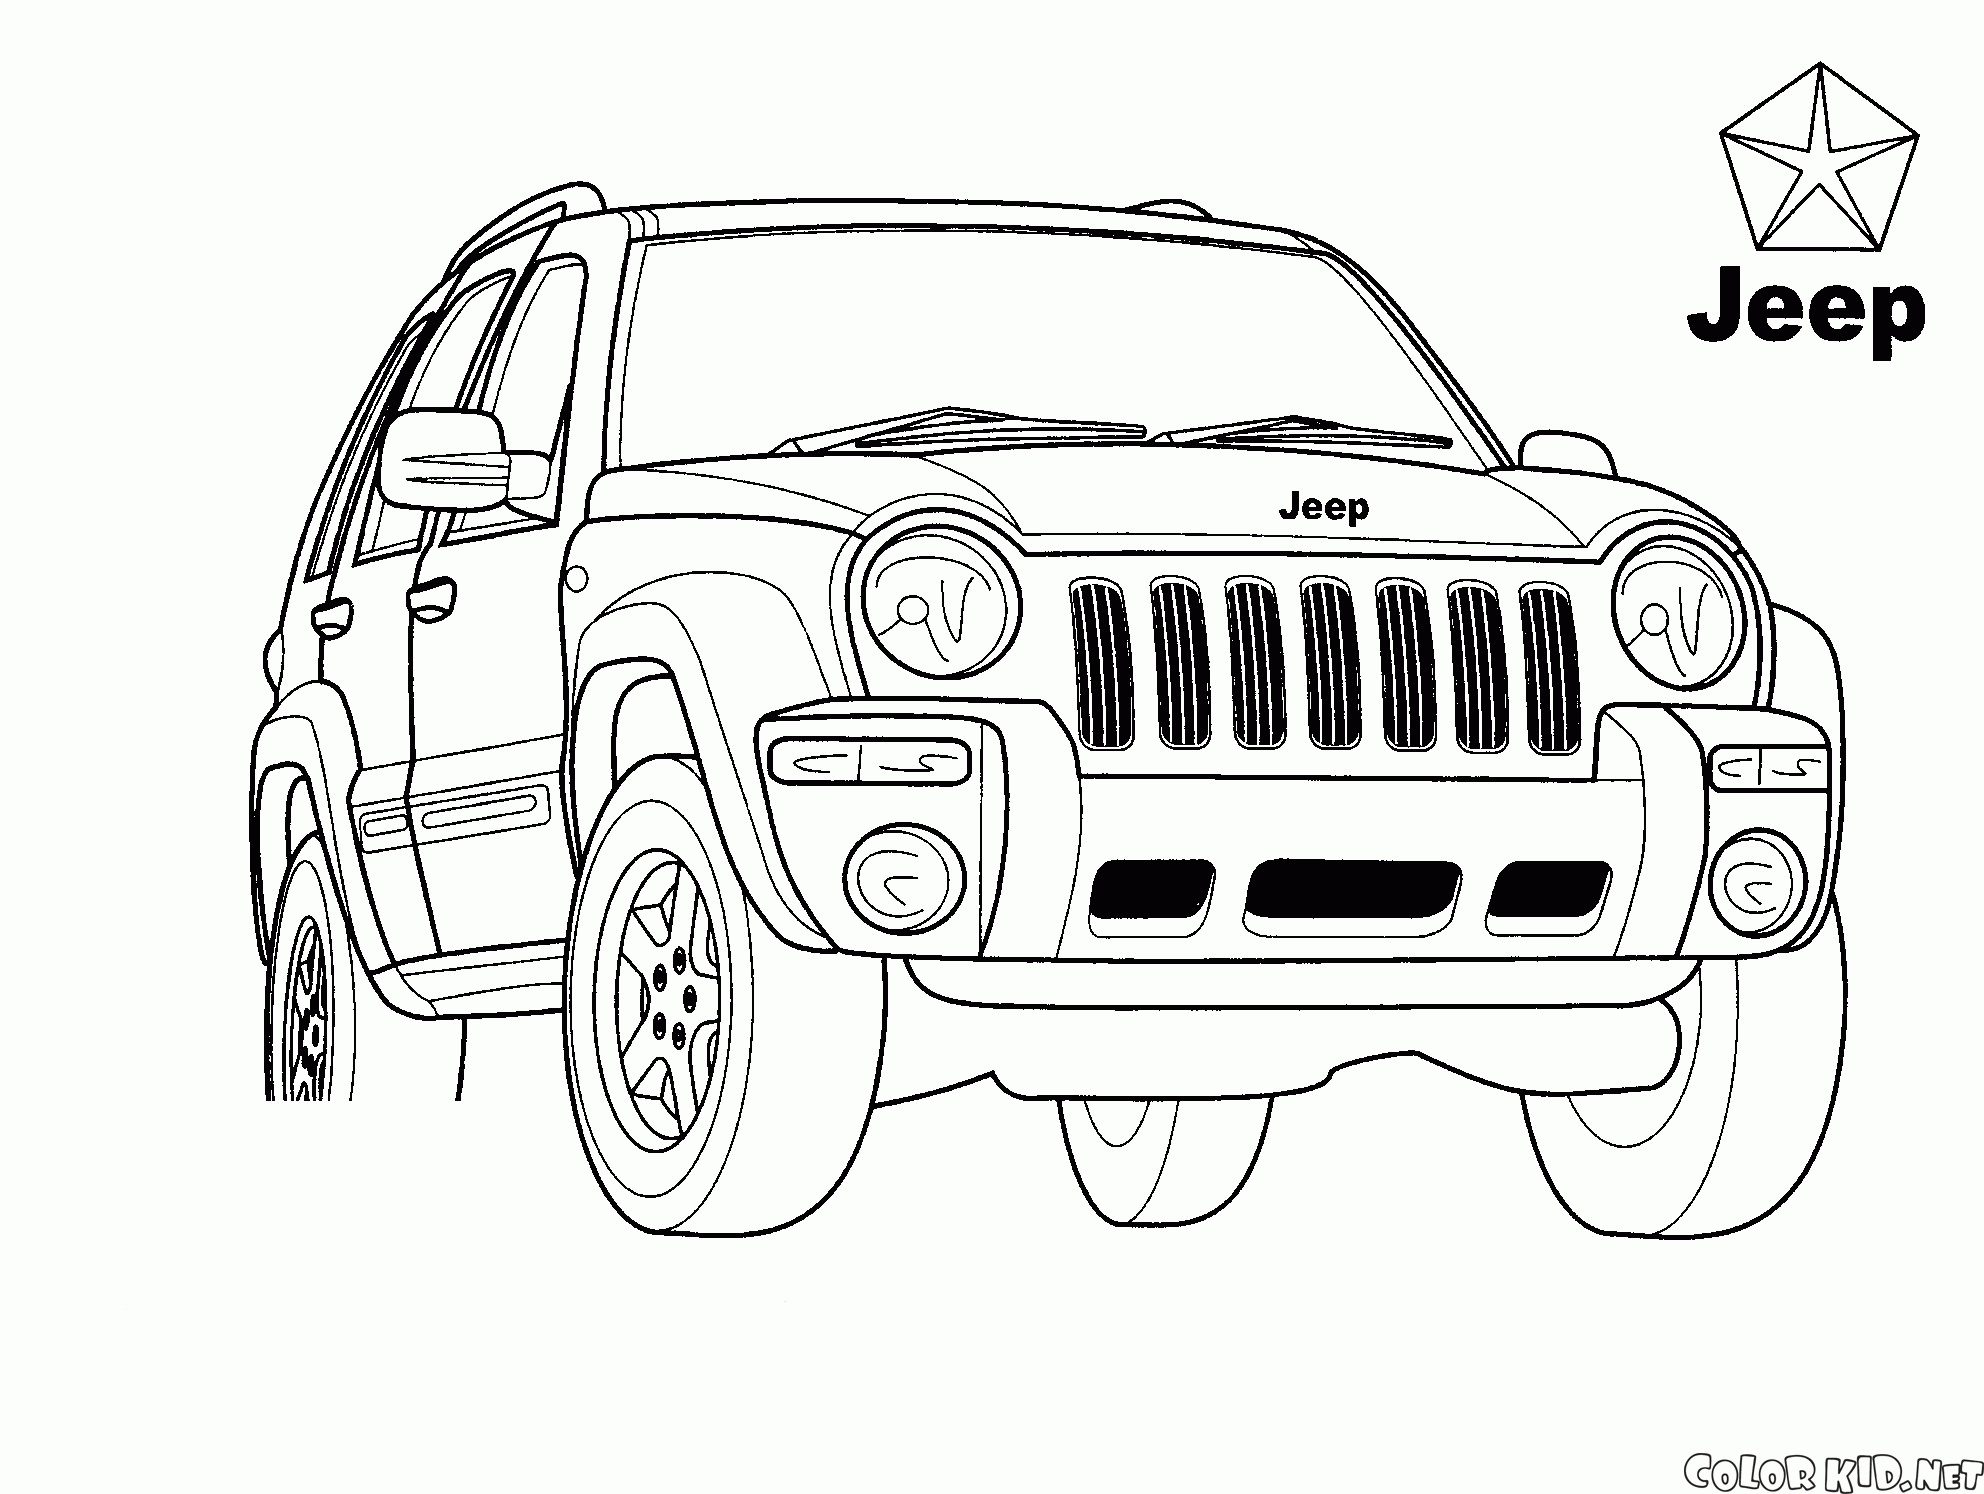 Universal Jeep